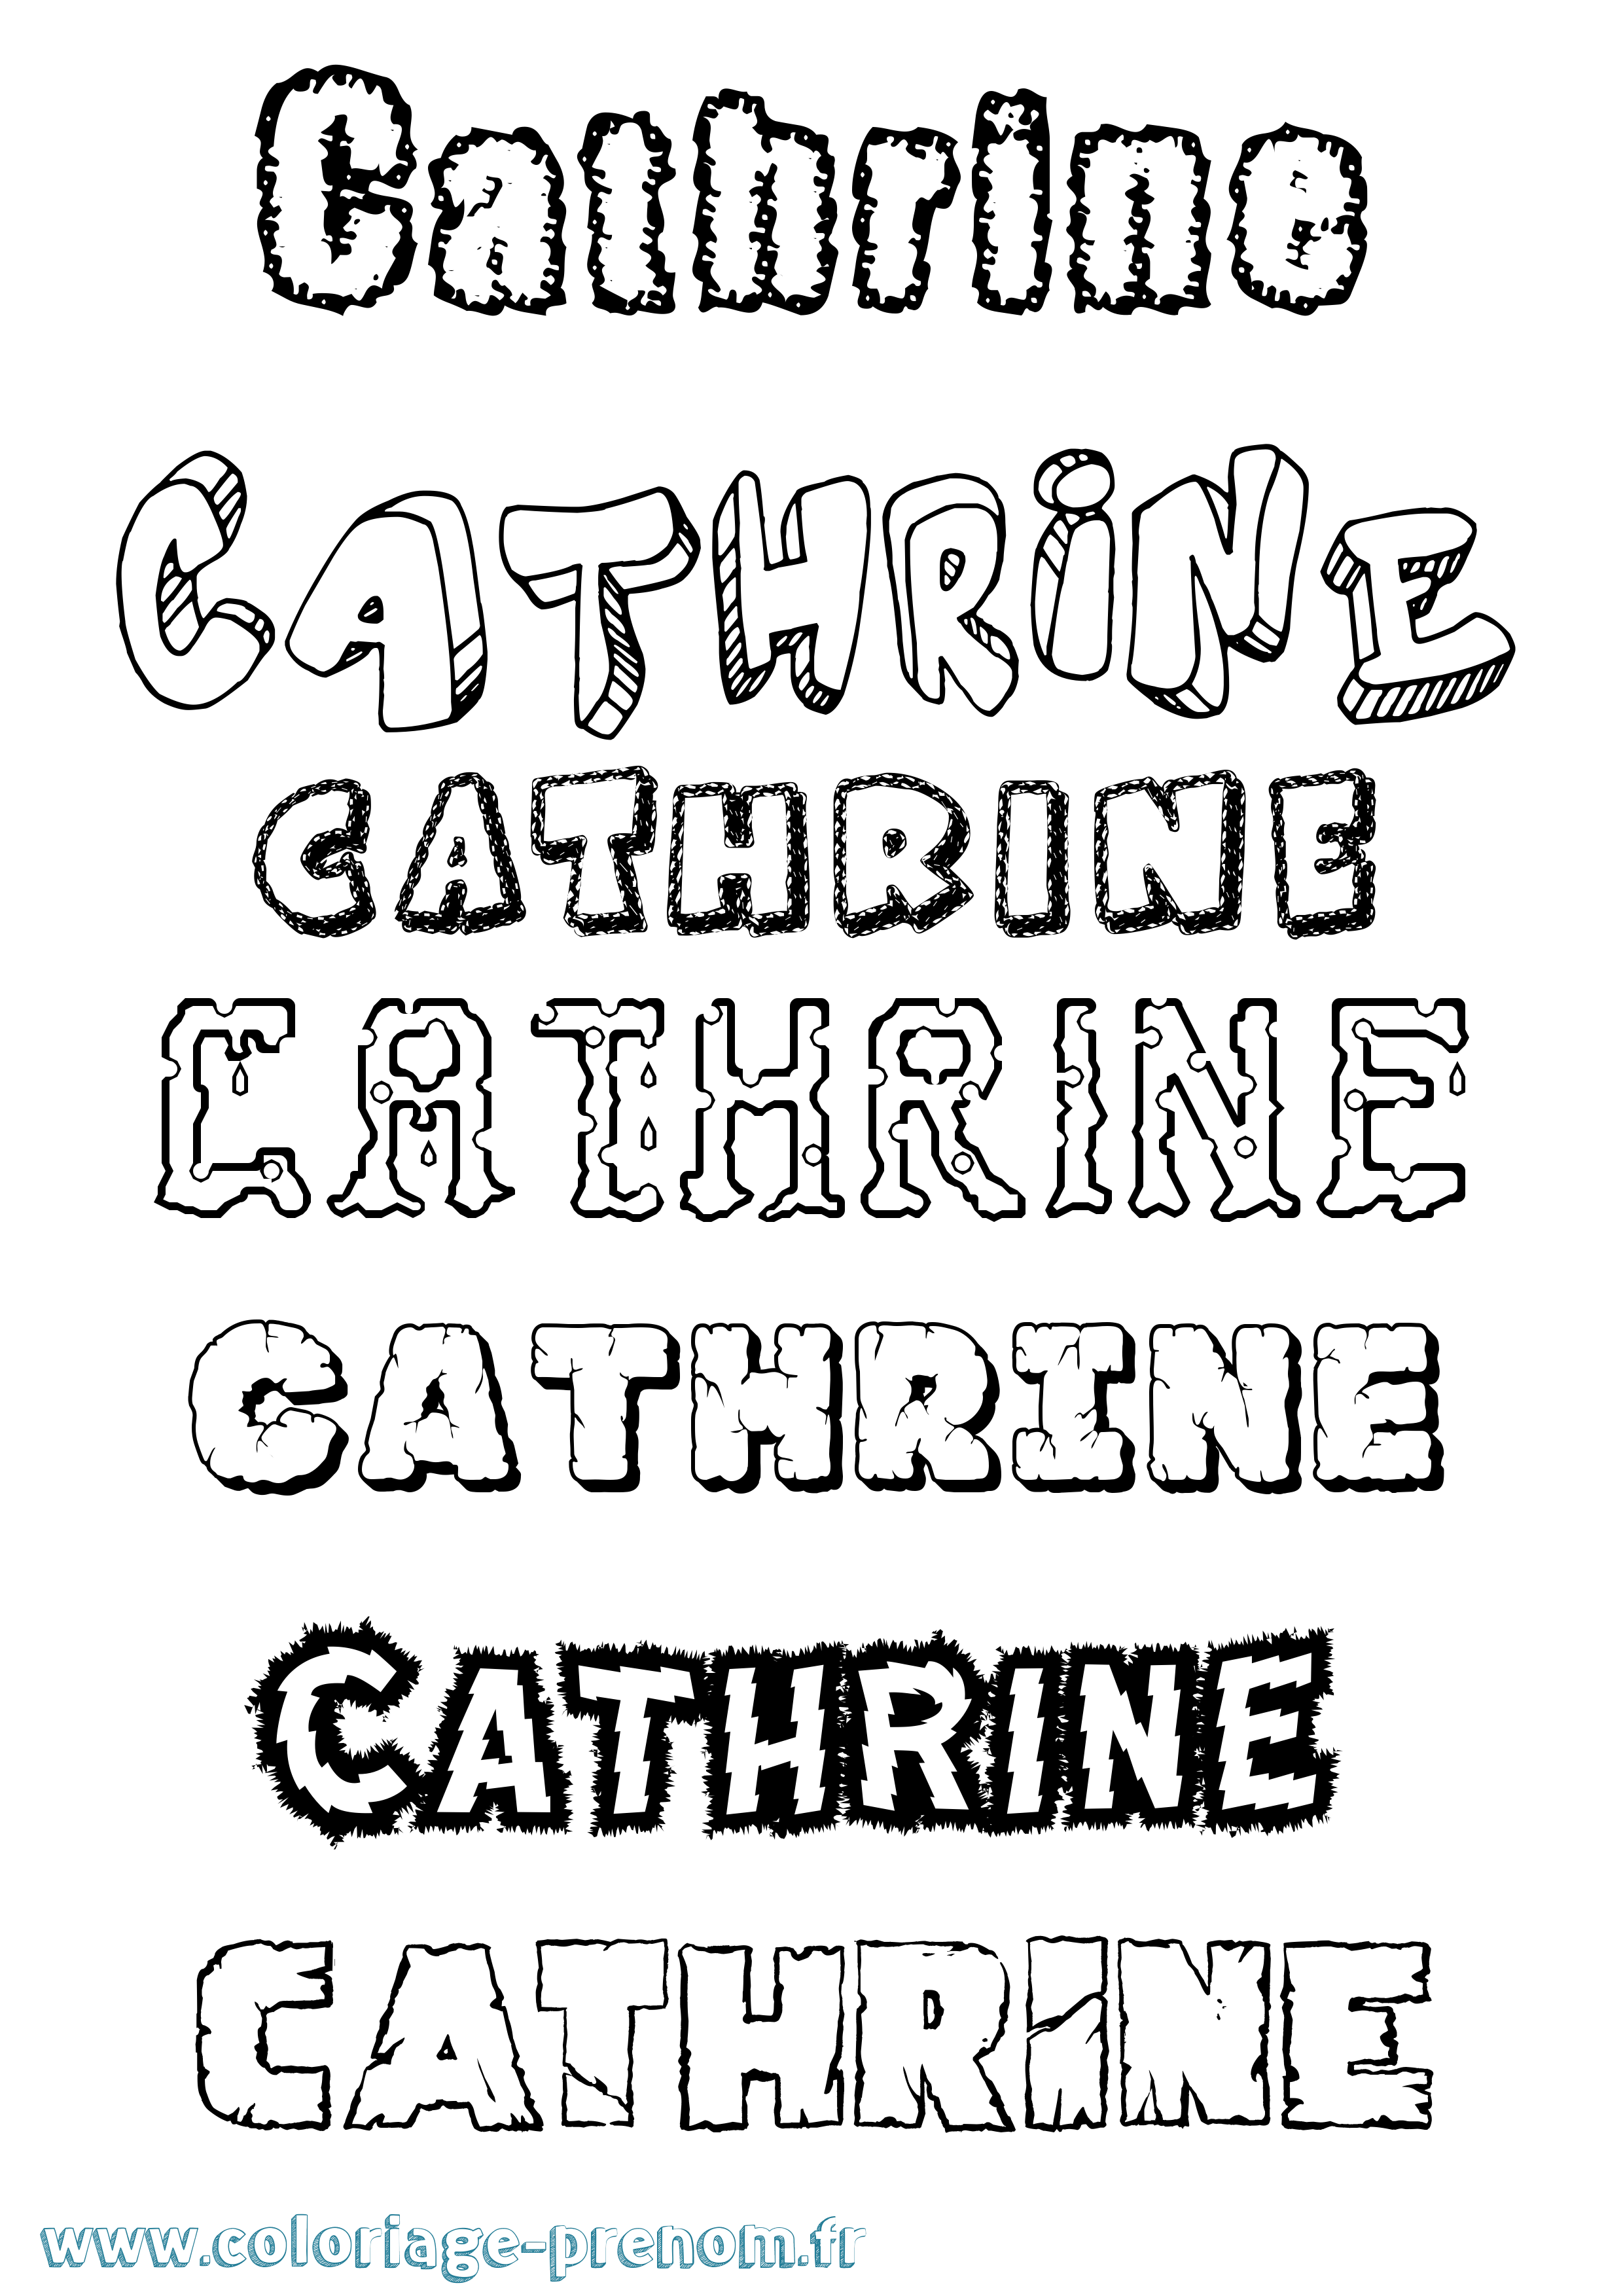 Coloriage prénom Cathrine Destructuré